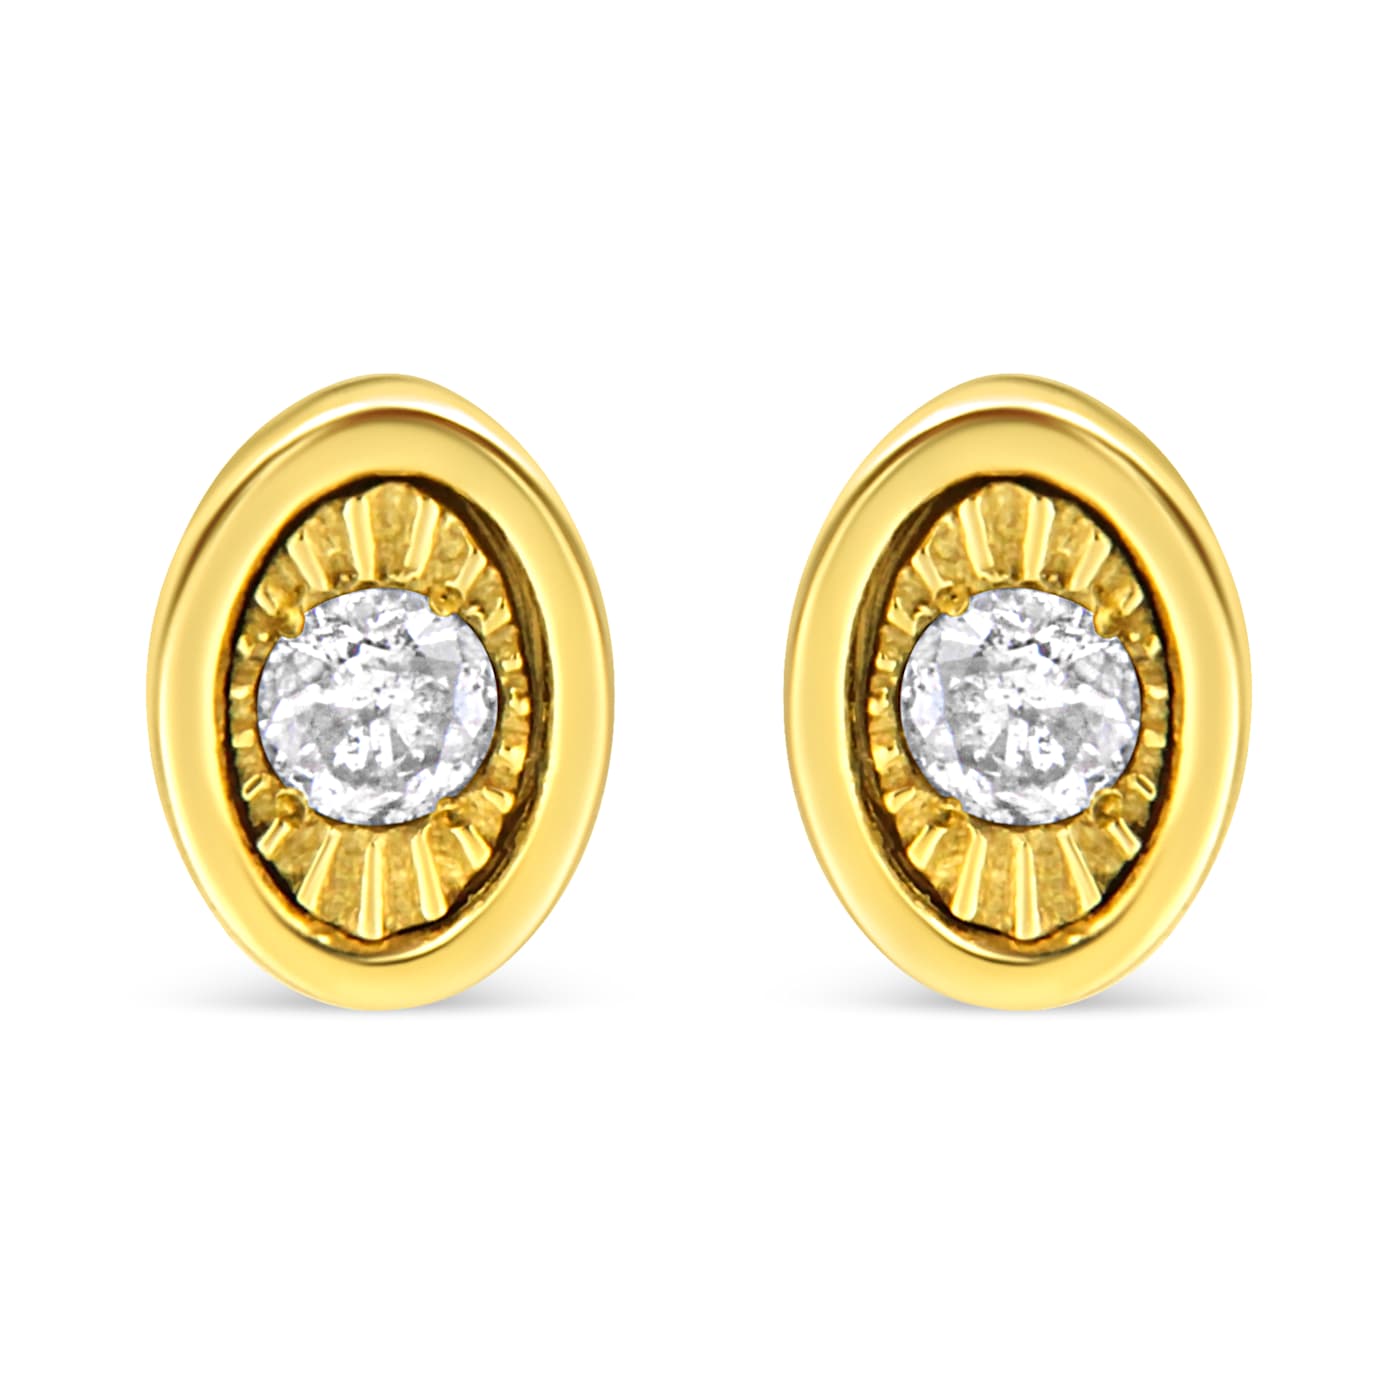 1 Carat Pave Diamond Stud Earrings 10K Yellow Gold Cube Shape